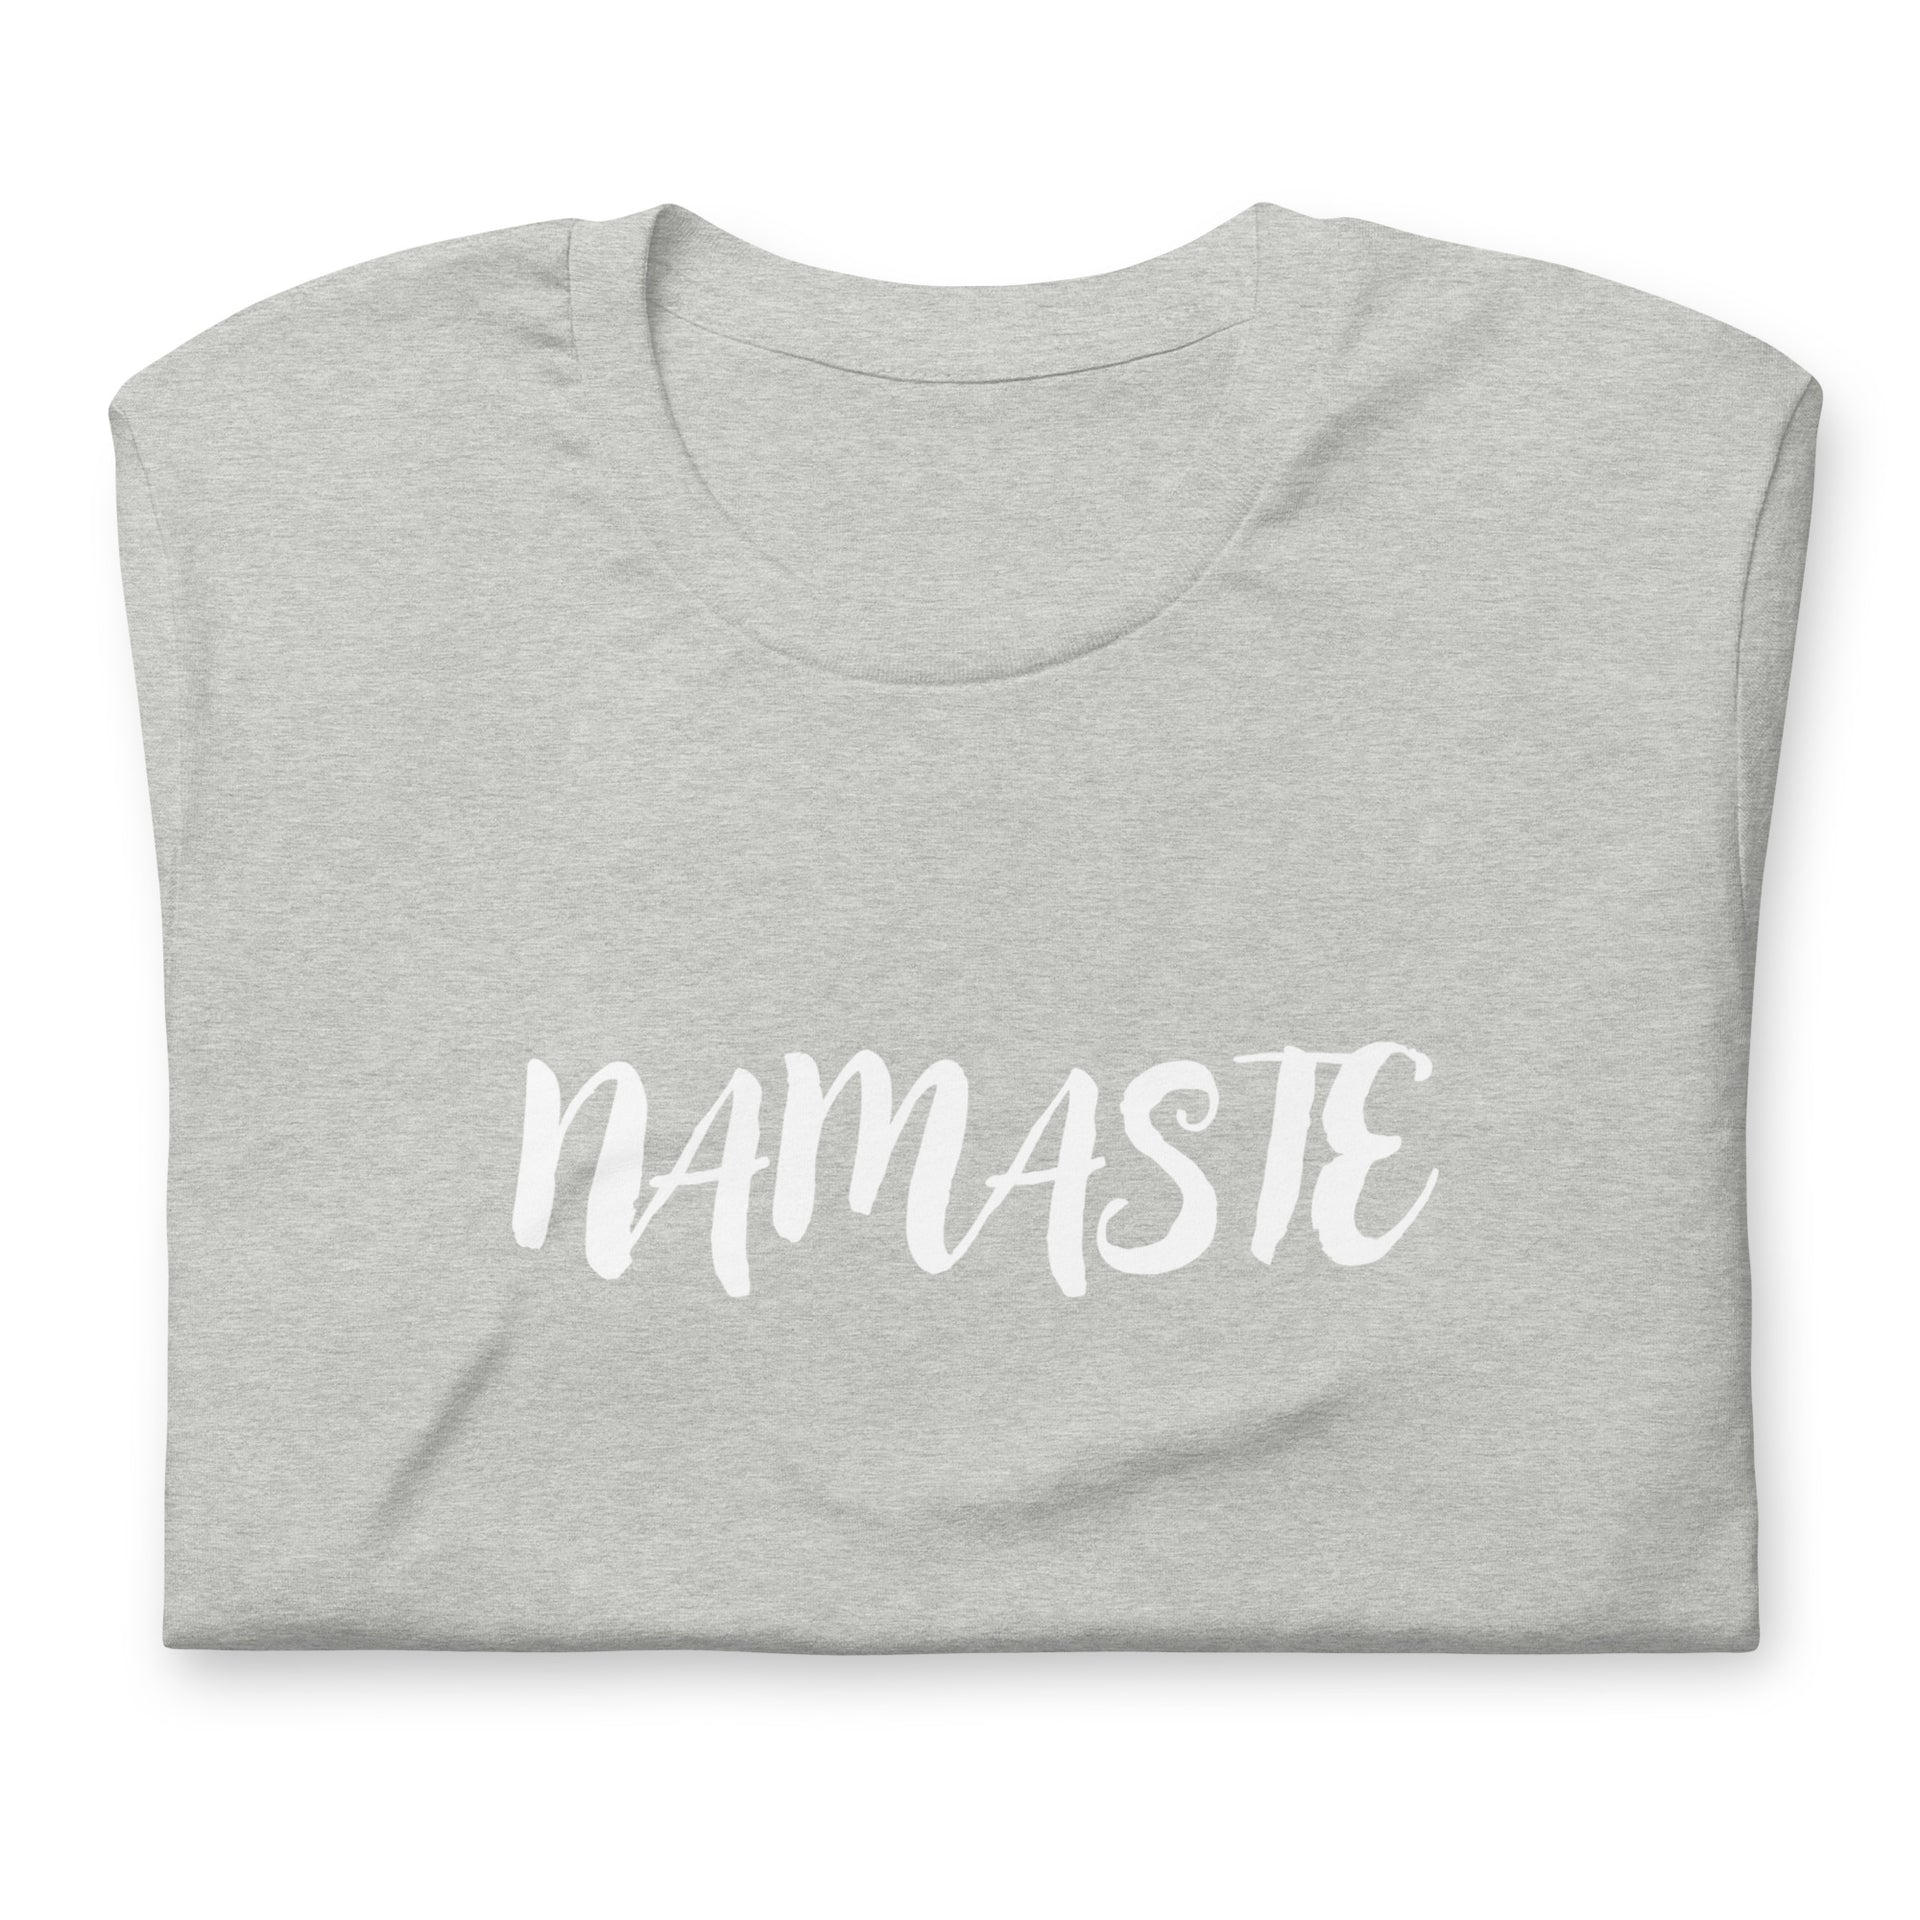 Spirituella – Namaste shirt Yoga